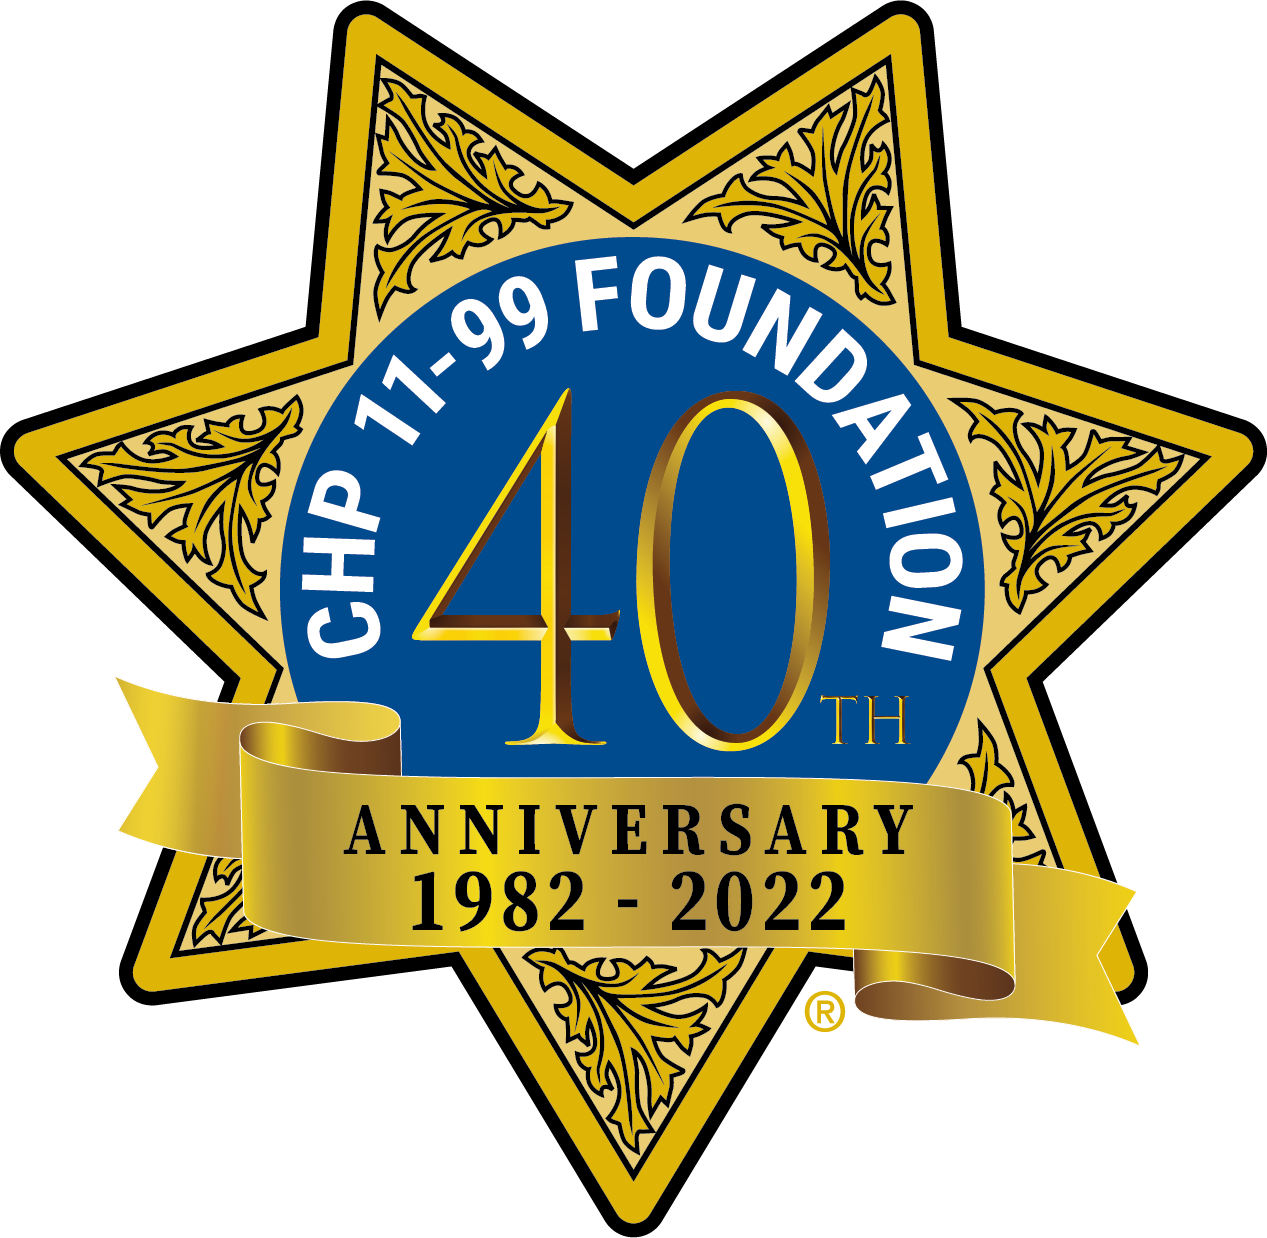 CHP 11-99 Foundation